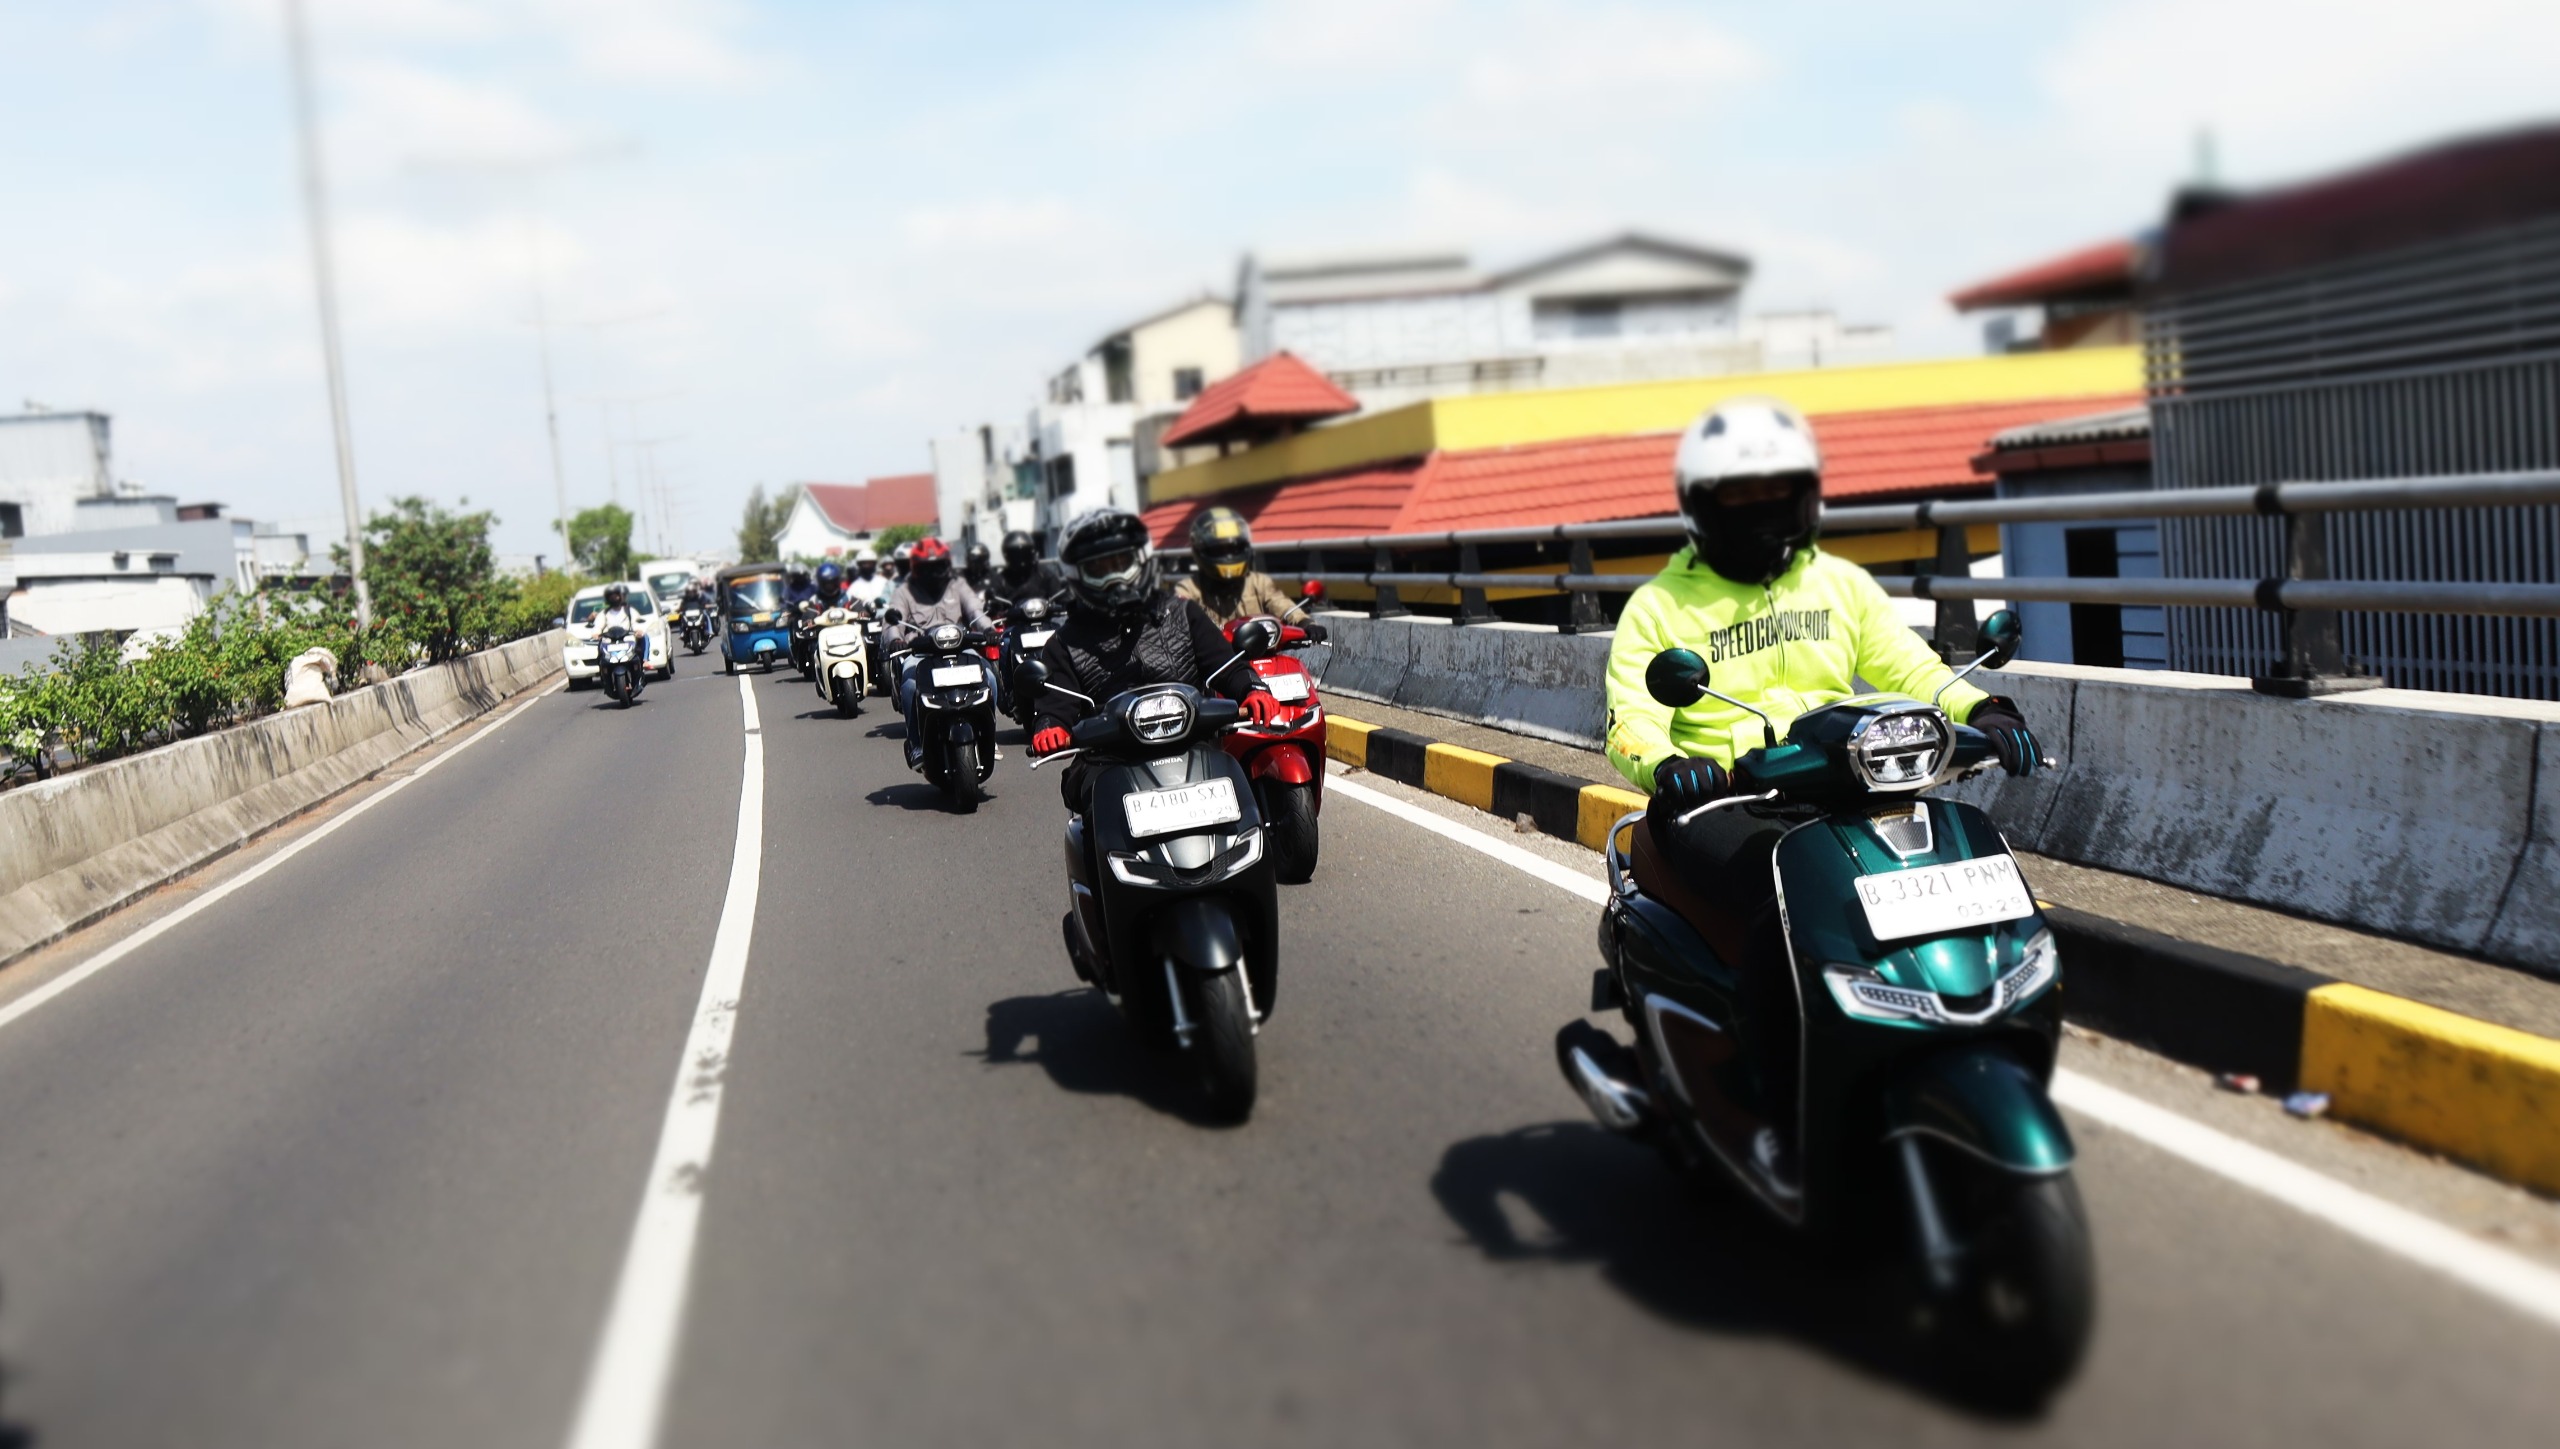 Wahana Gelar Riding Bareng Honda Stylo 160 Sambangi Lokasi Bersejarah di Jakarta